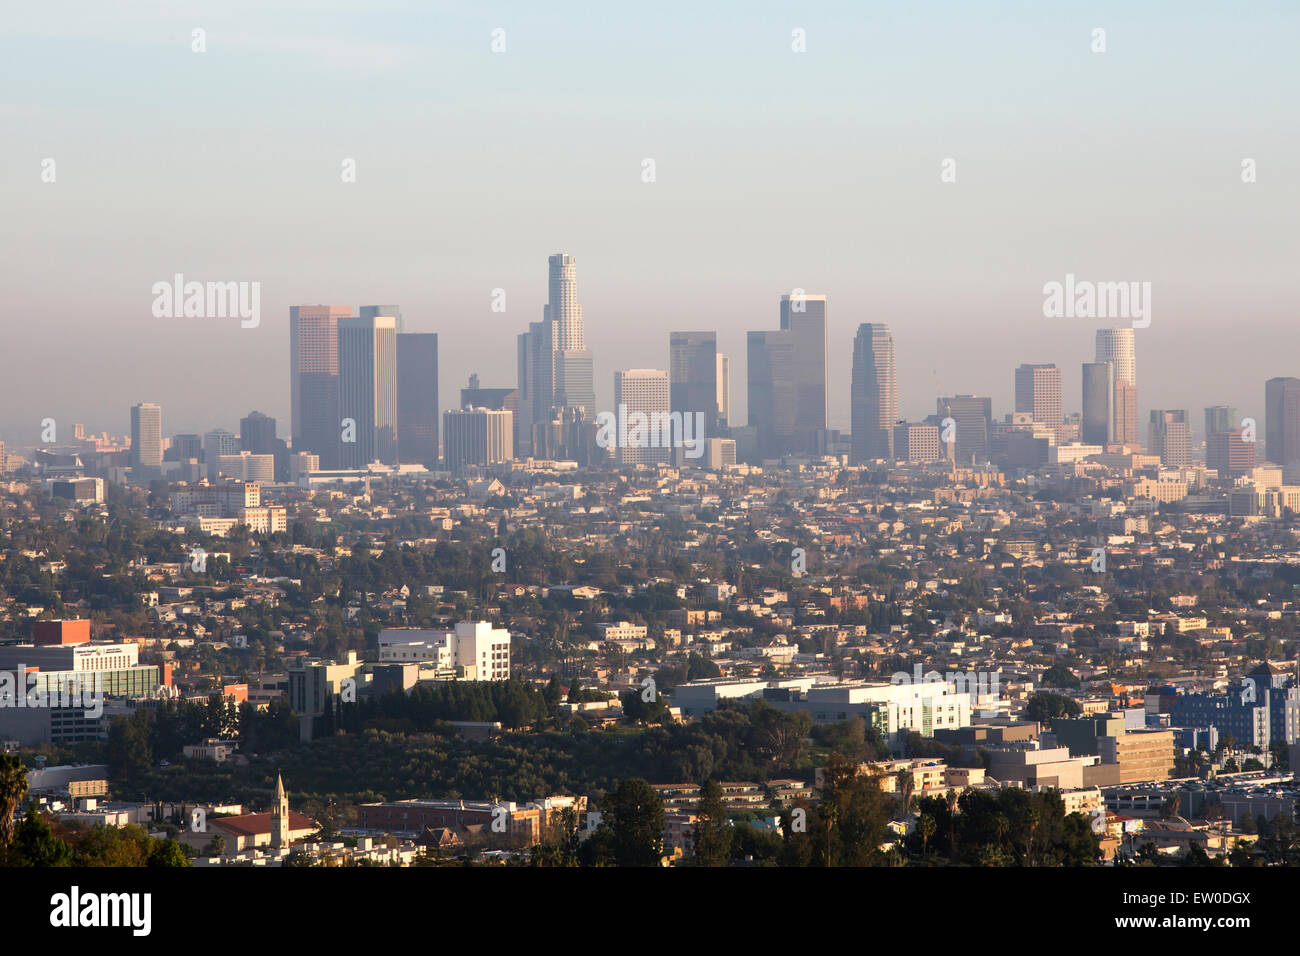 Skyline Of Los Angeles At Daytime Stock Photo Alamy